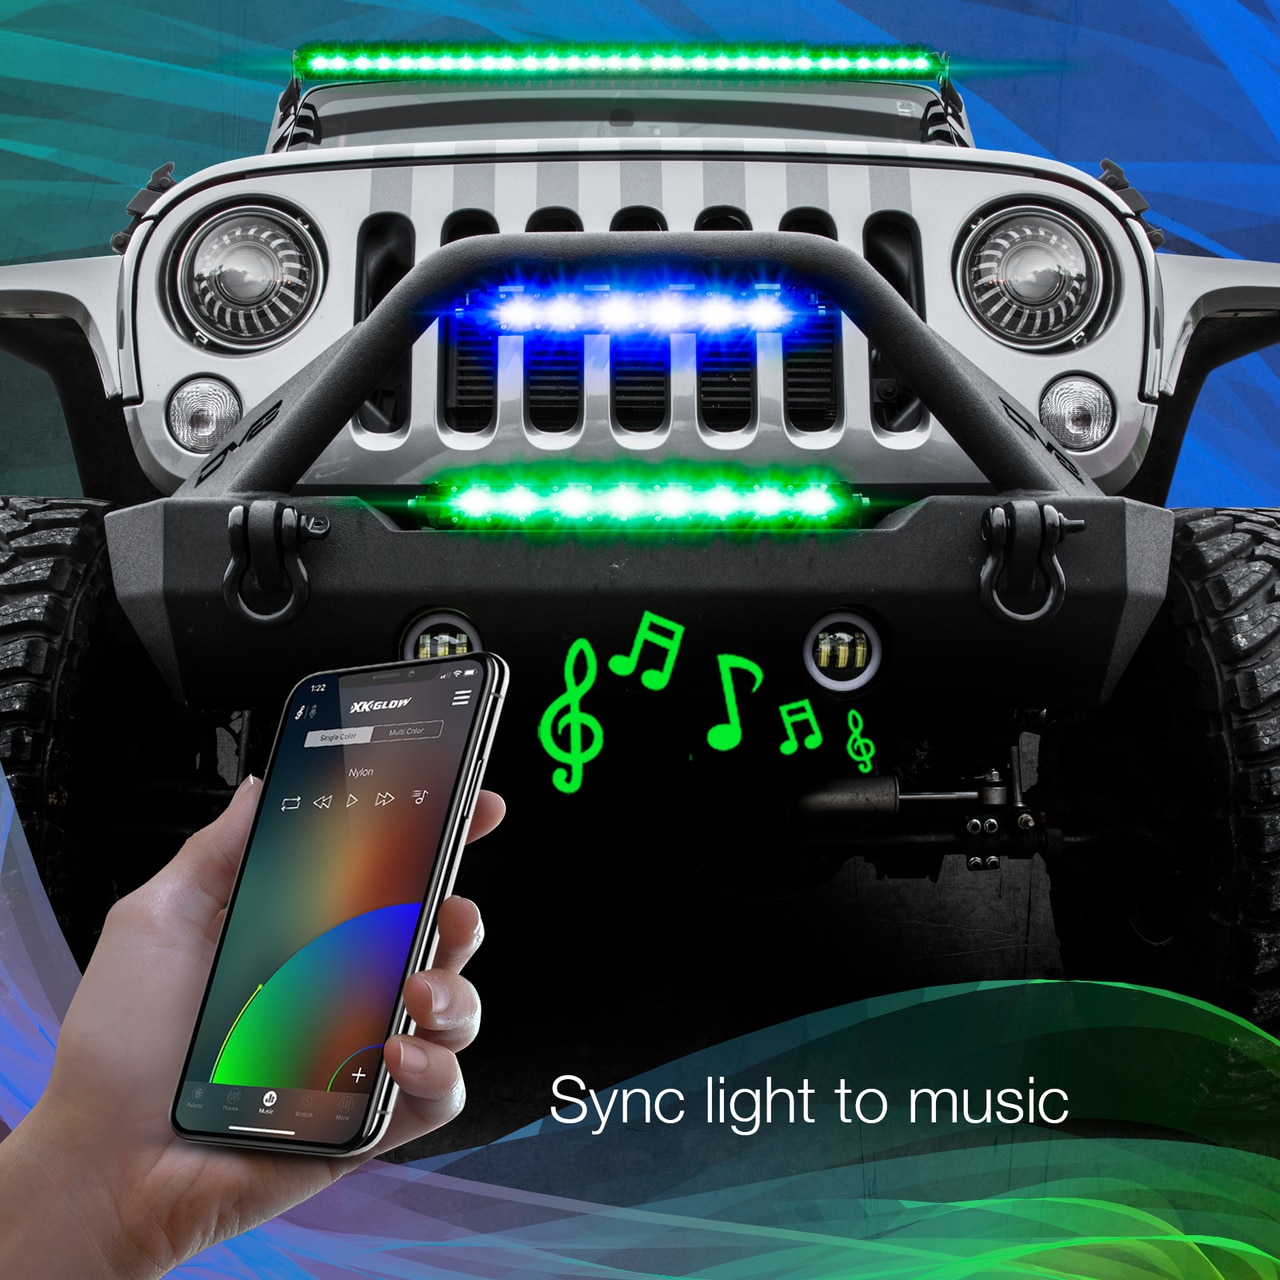 50" Multi-Color XKChrome RGBW LED Light Bar w/Bluetooth - Click Image to Close